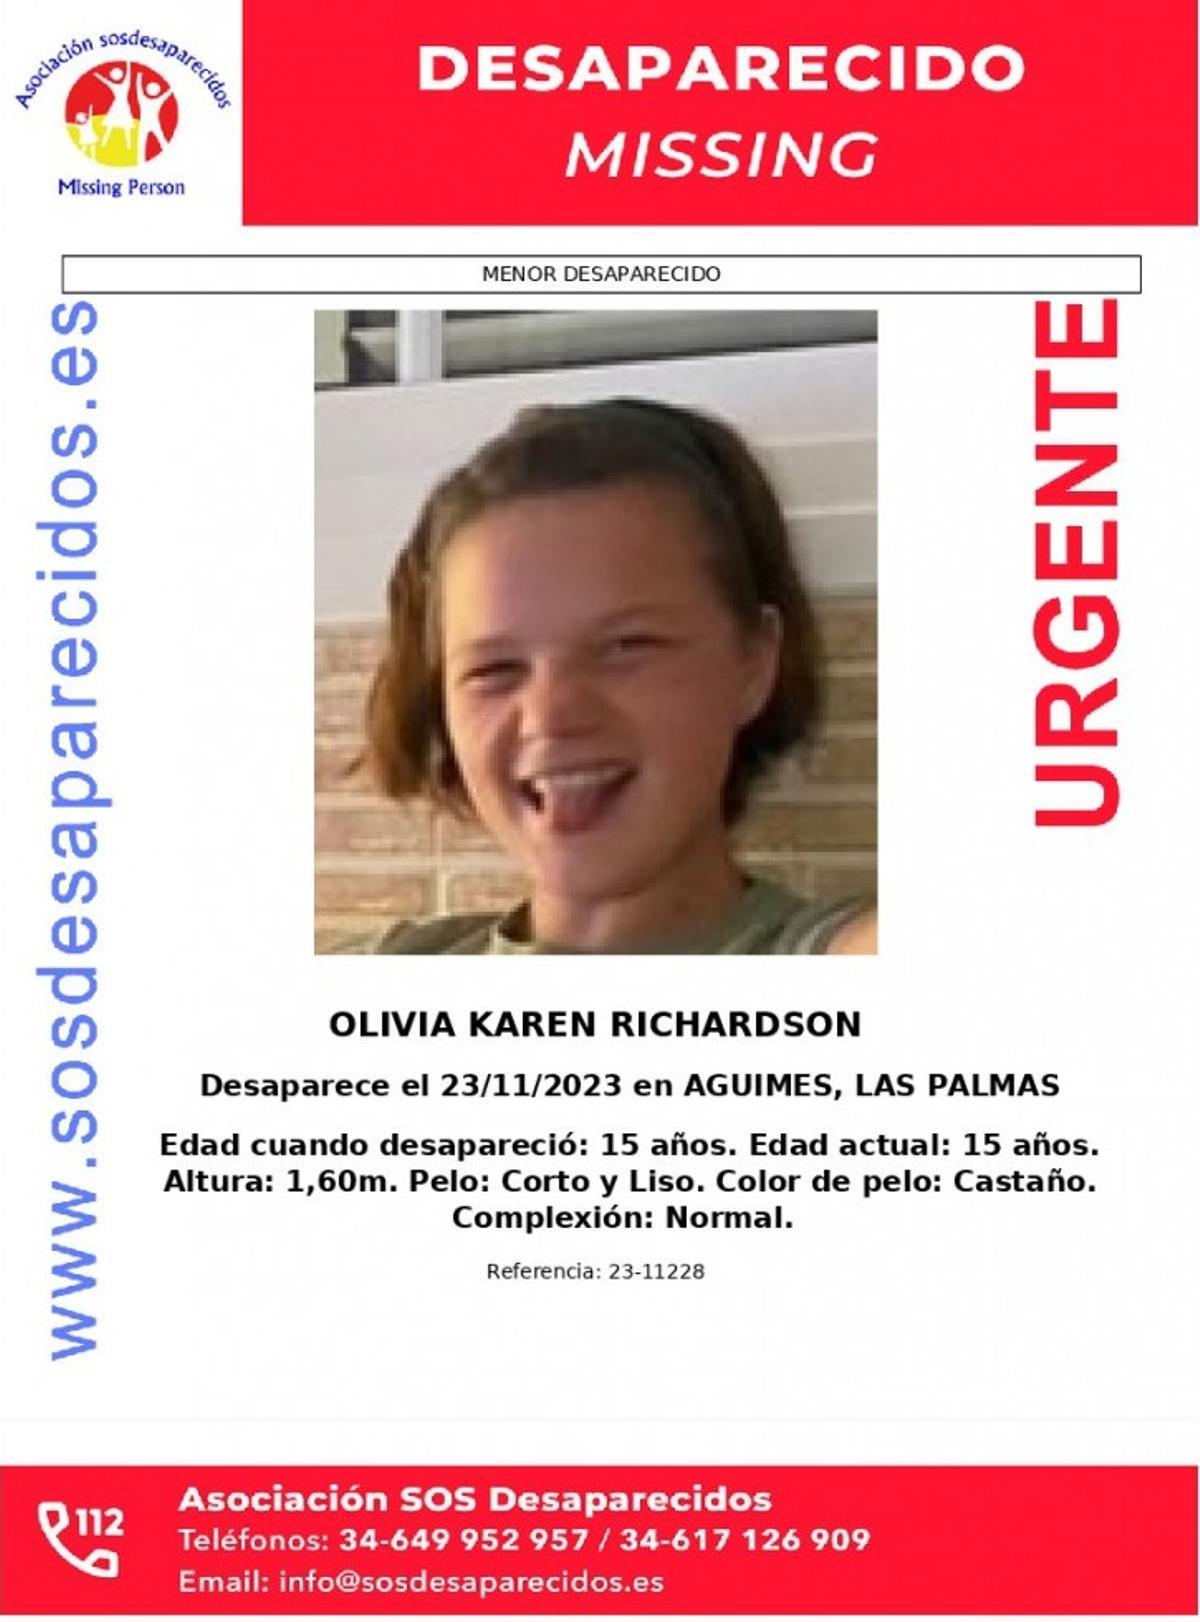 La desaparecida Olivia Karen Richardson